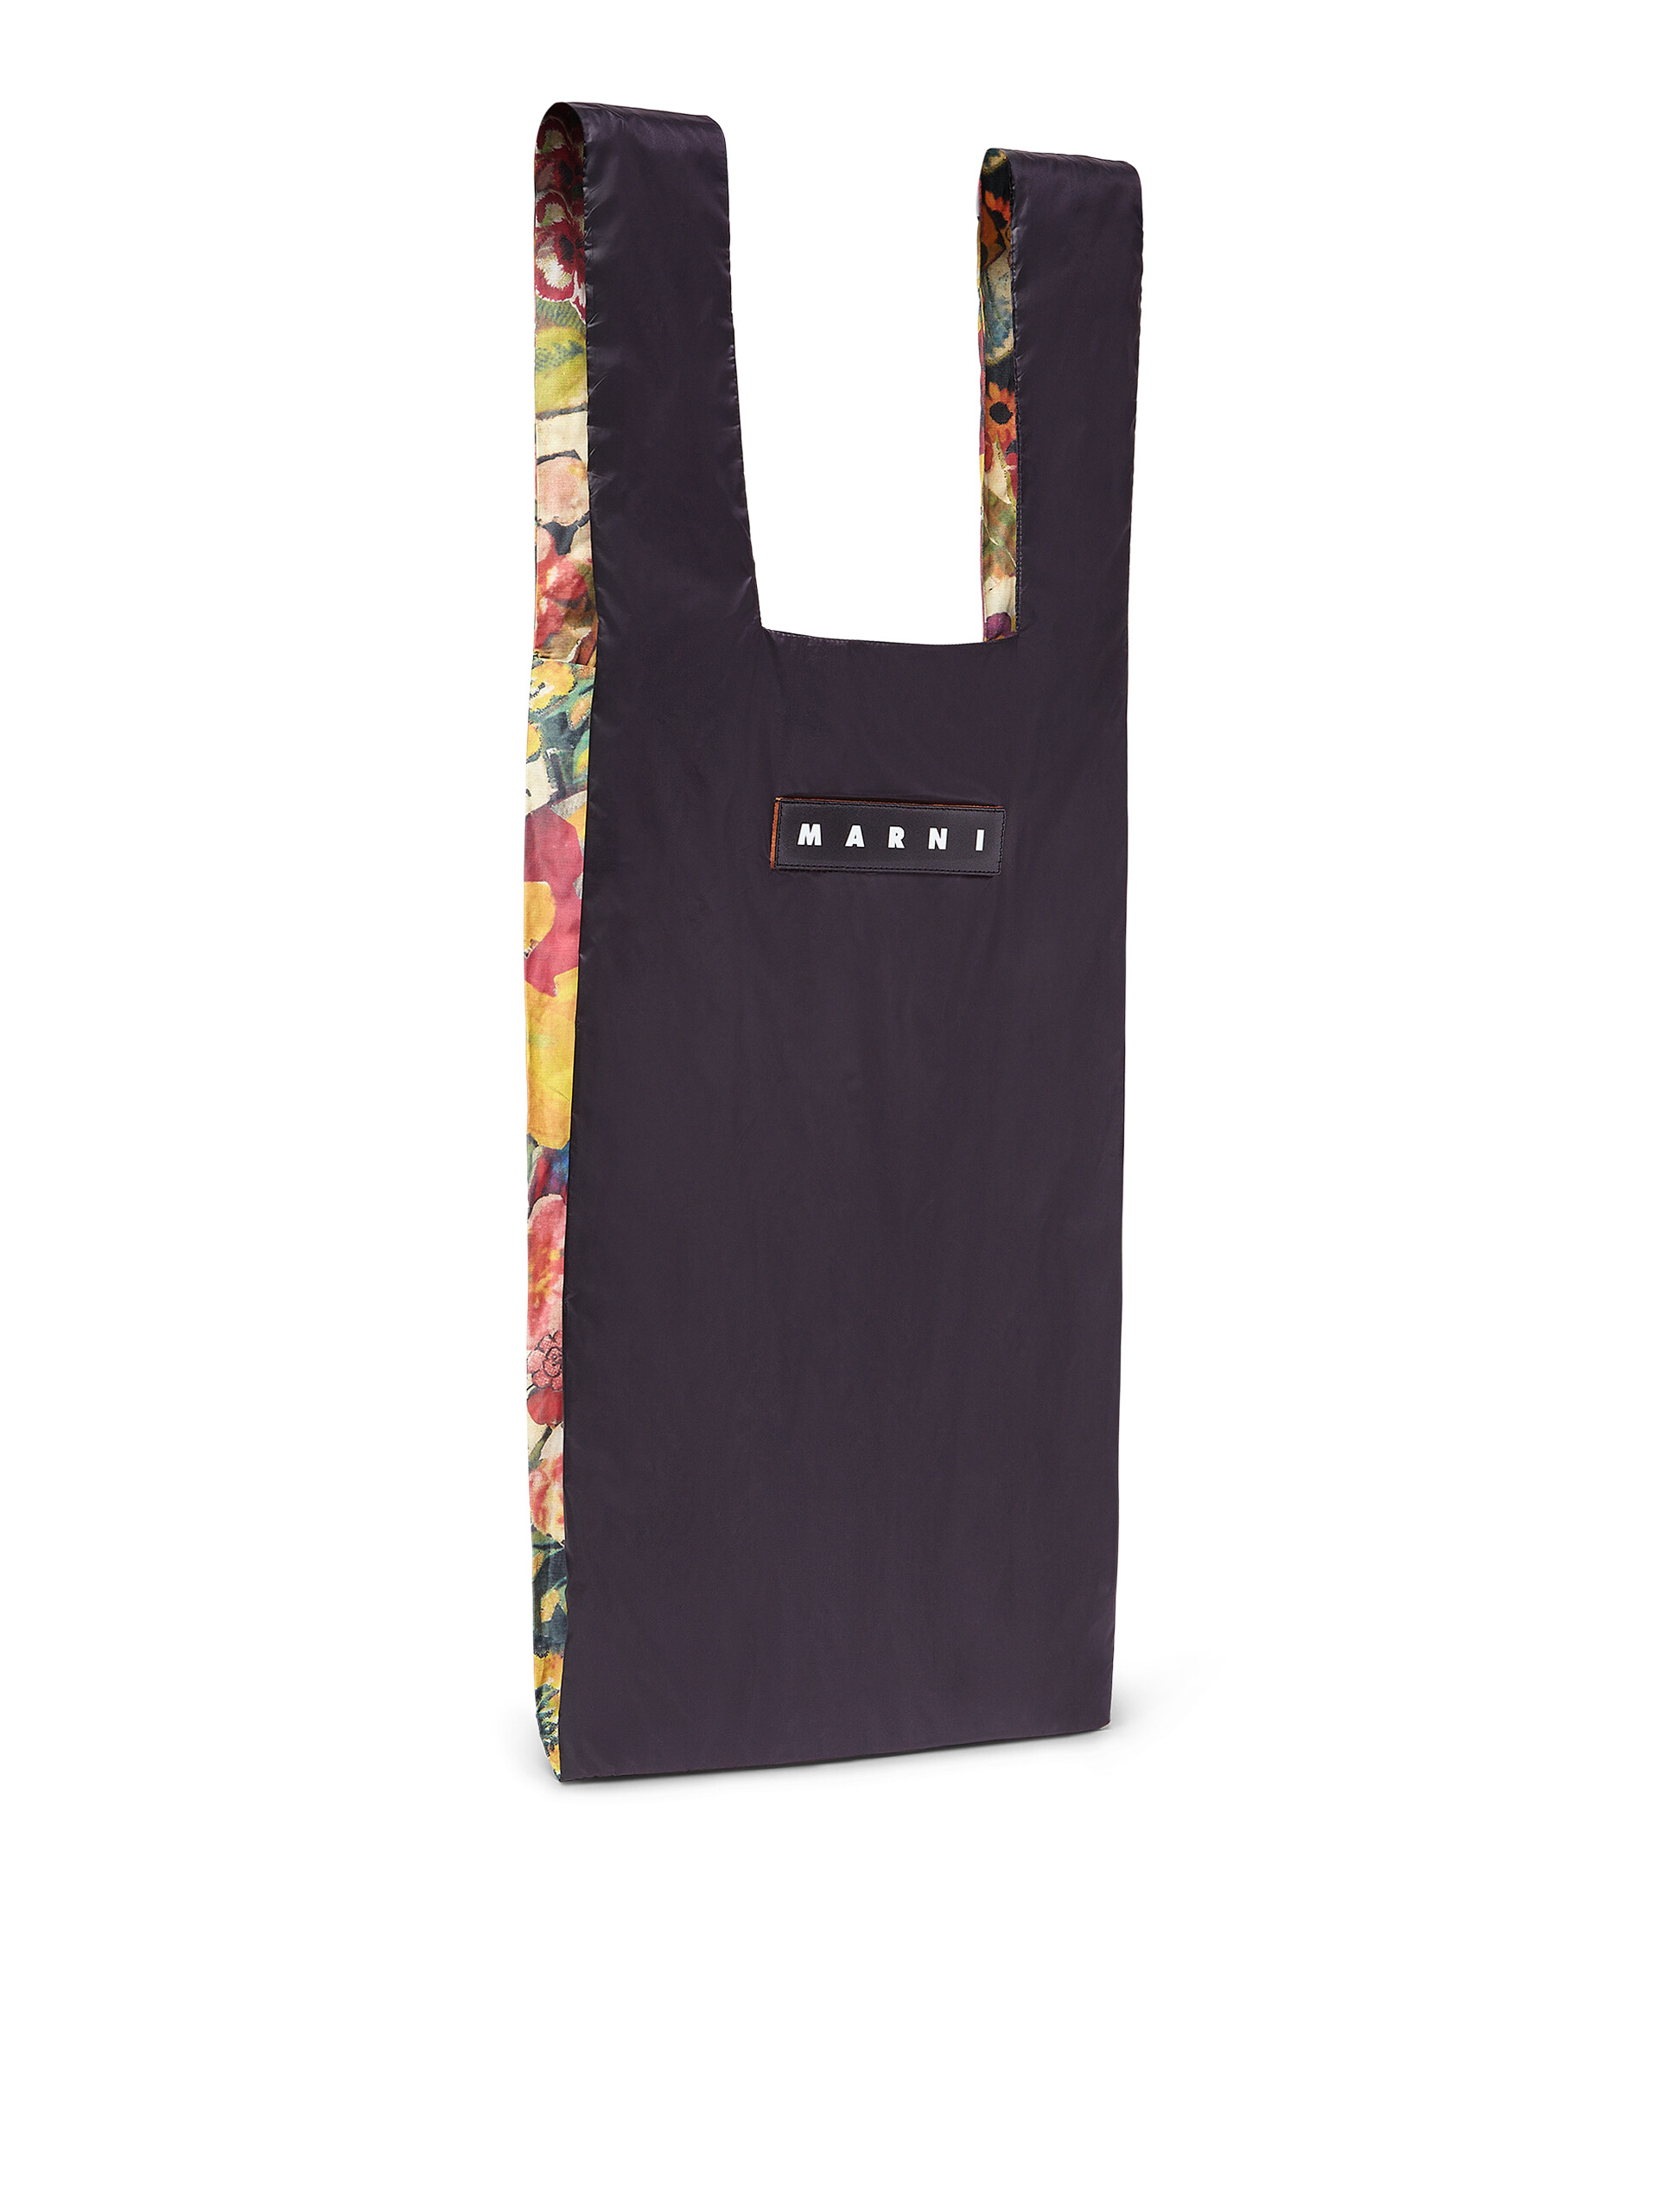 MARNI MARKET black shopping bag with floral print